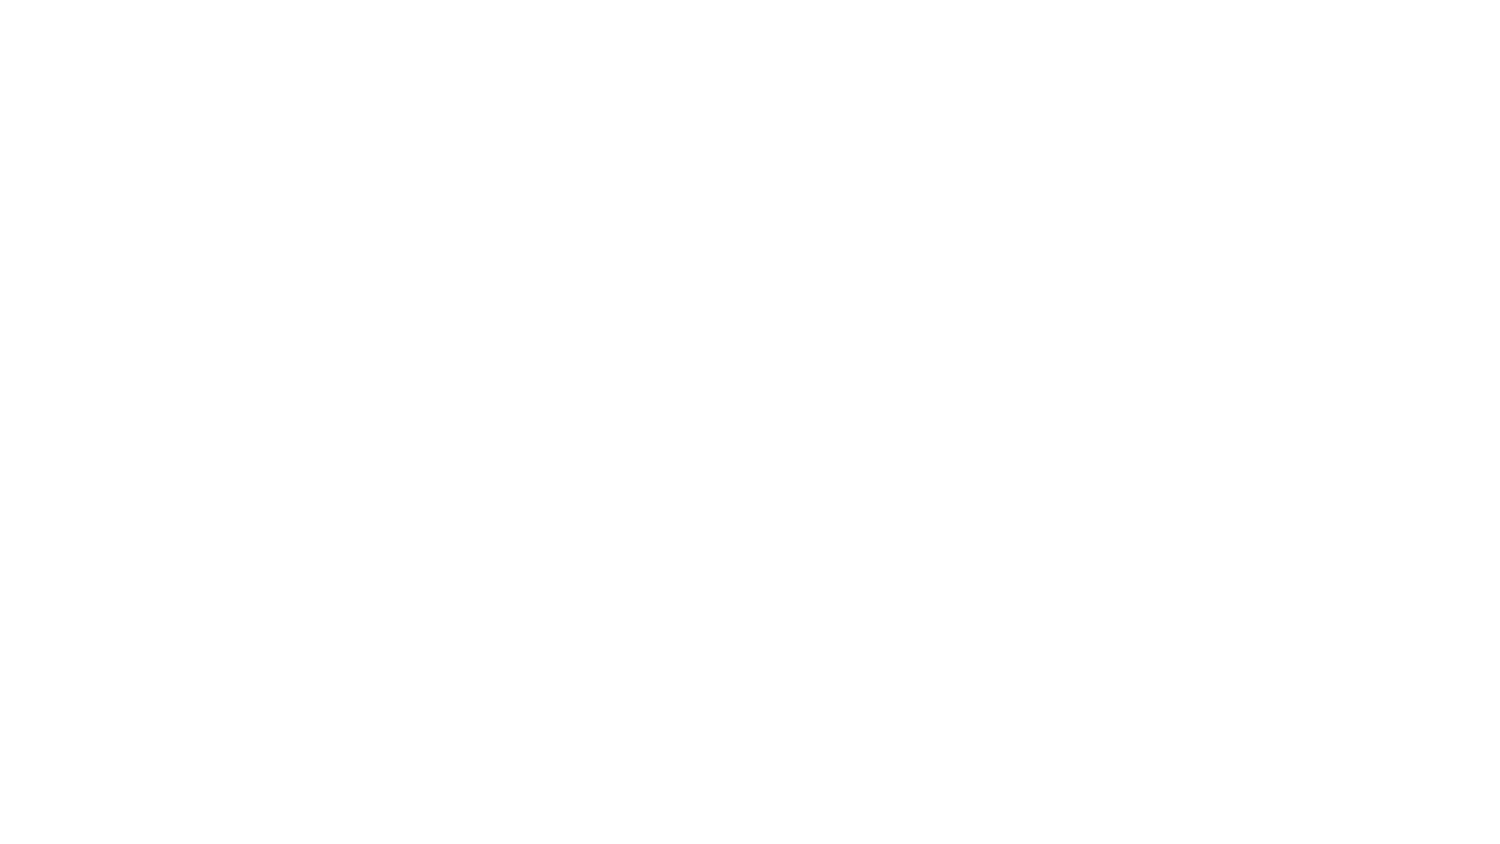 Welcome to Garrison Industrial Steel | Fabrication | Industrial Fabrication | Waste Water Treatment